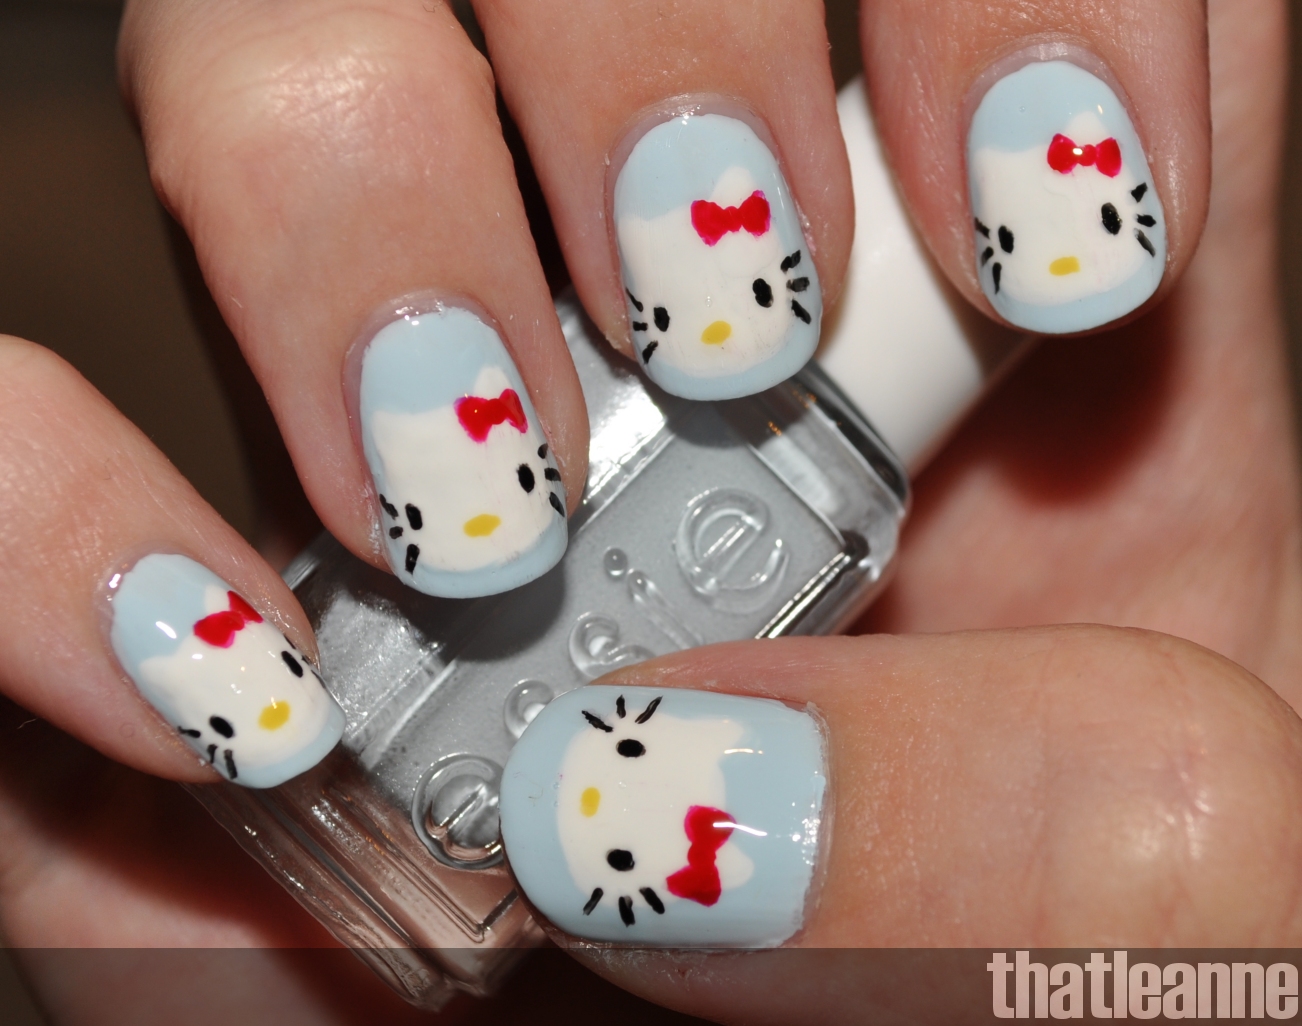 2. Hello Kitty Nail Art - wide 3